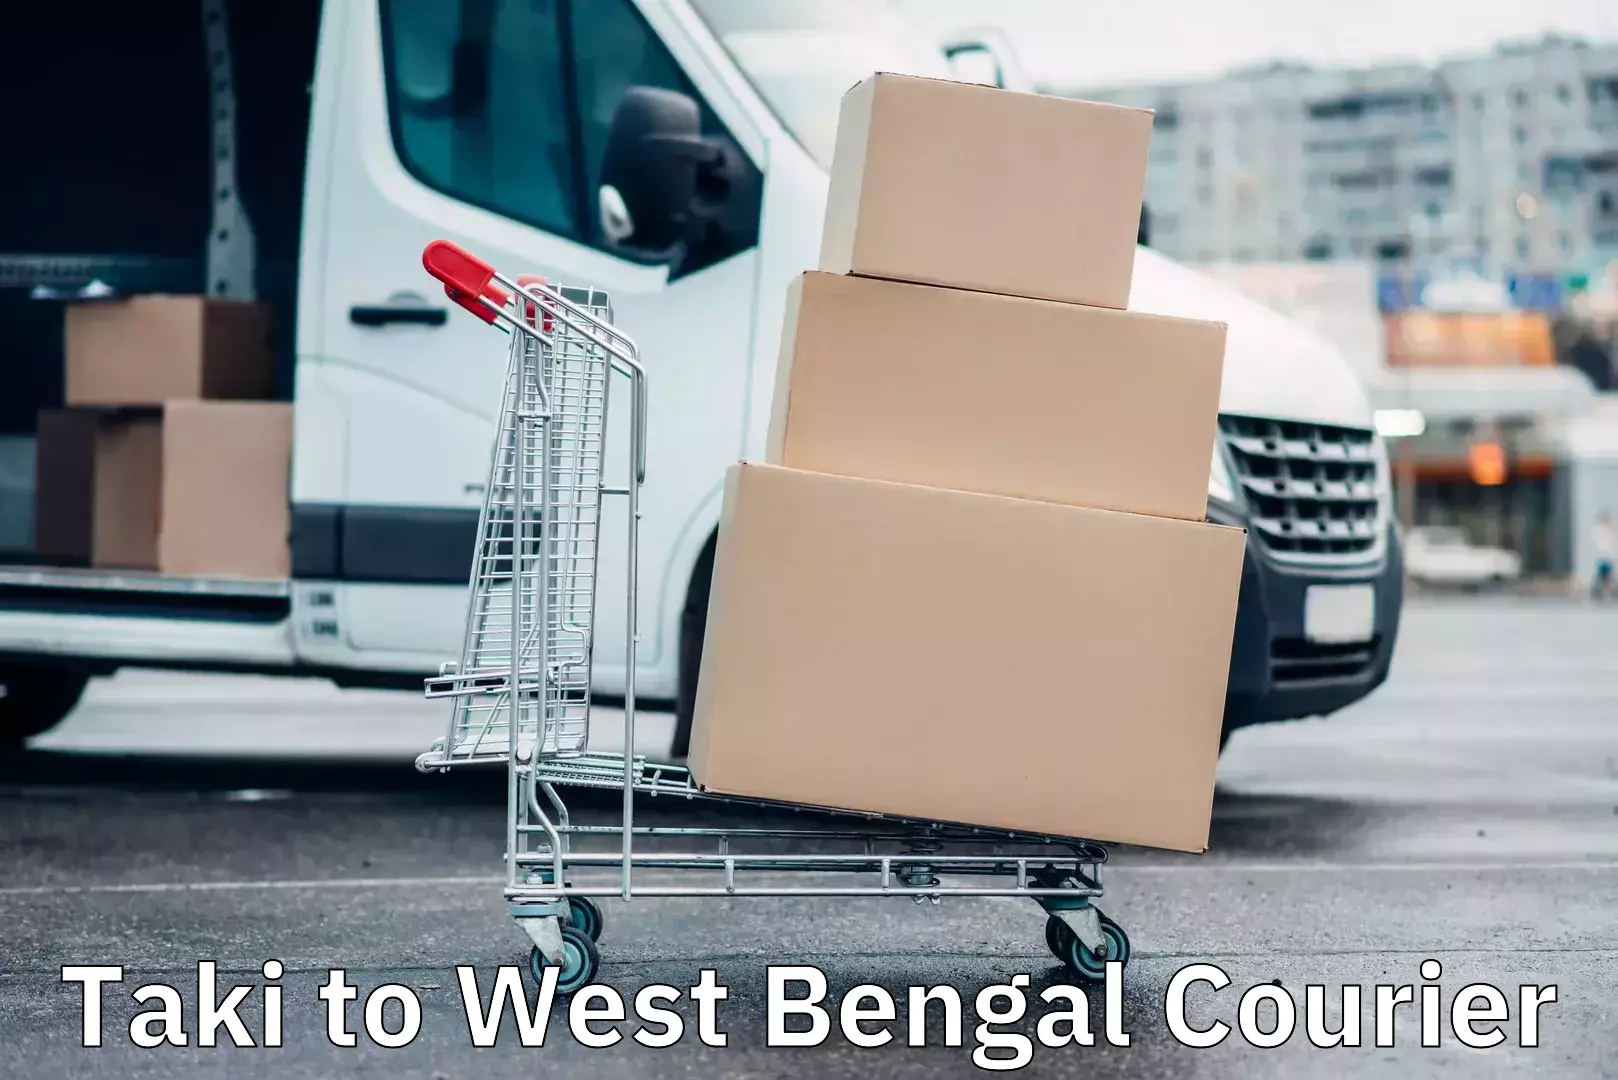 International parcel service Taki to West Bengal